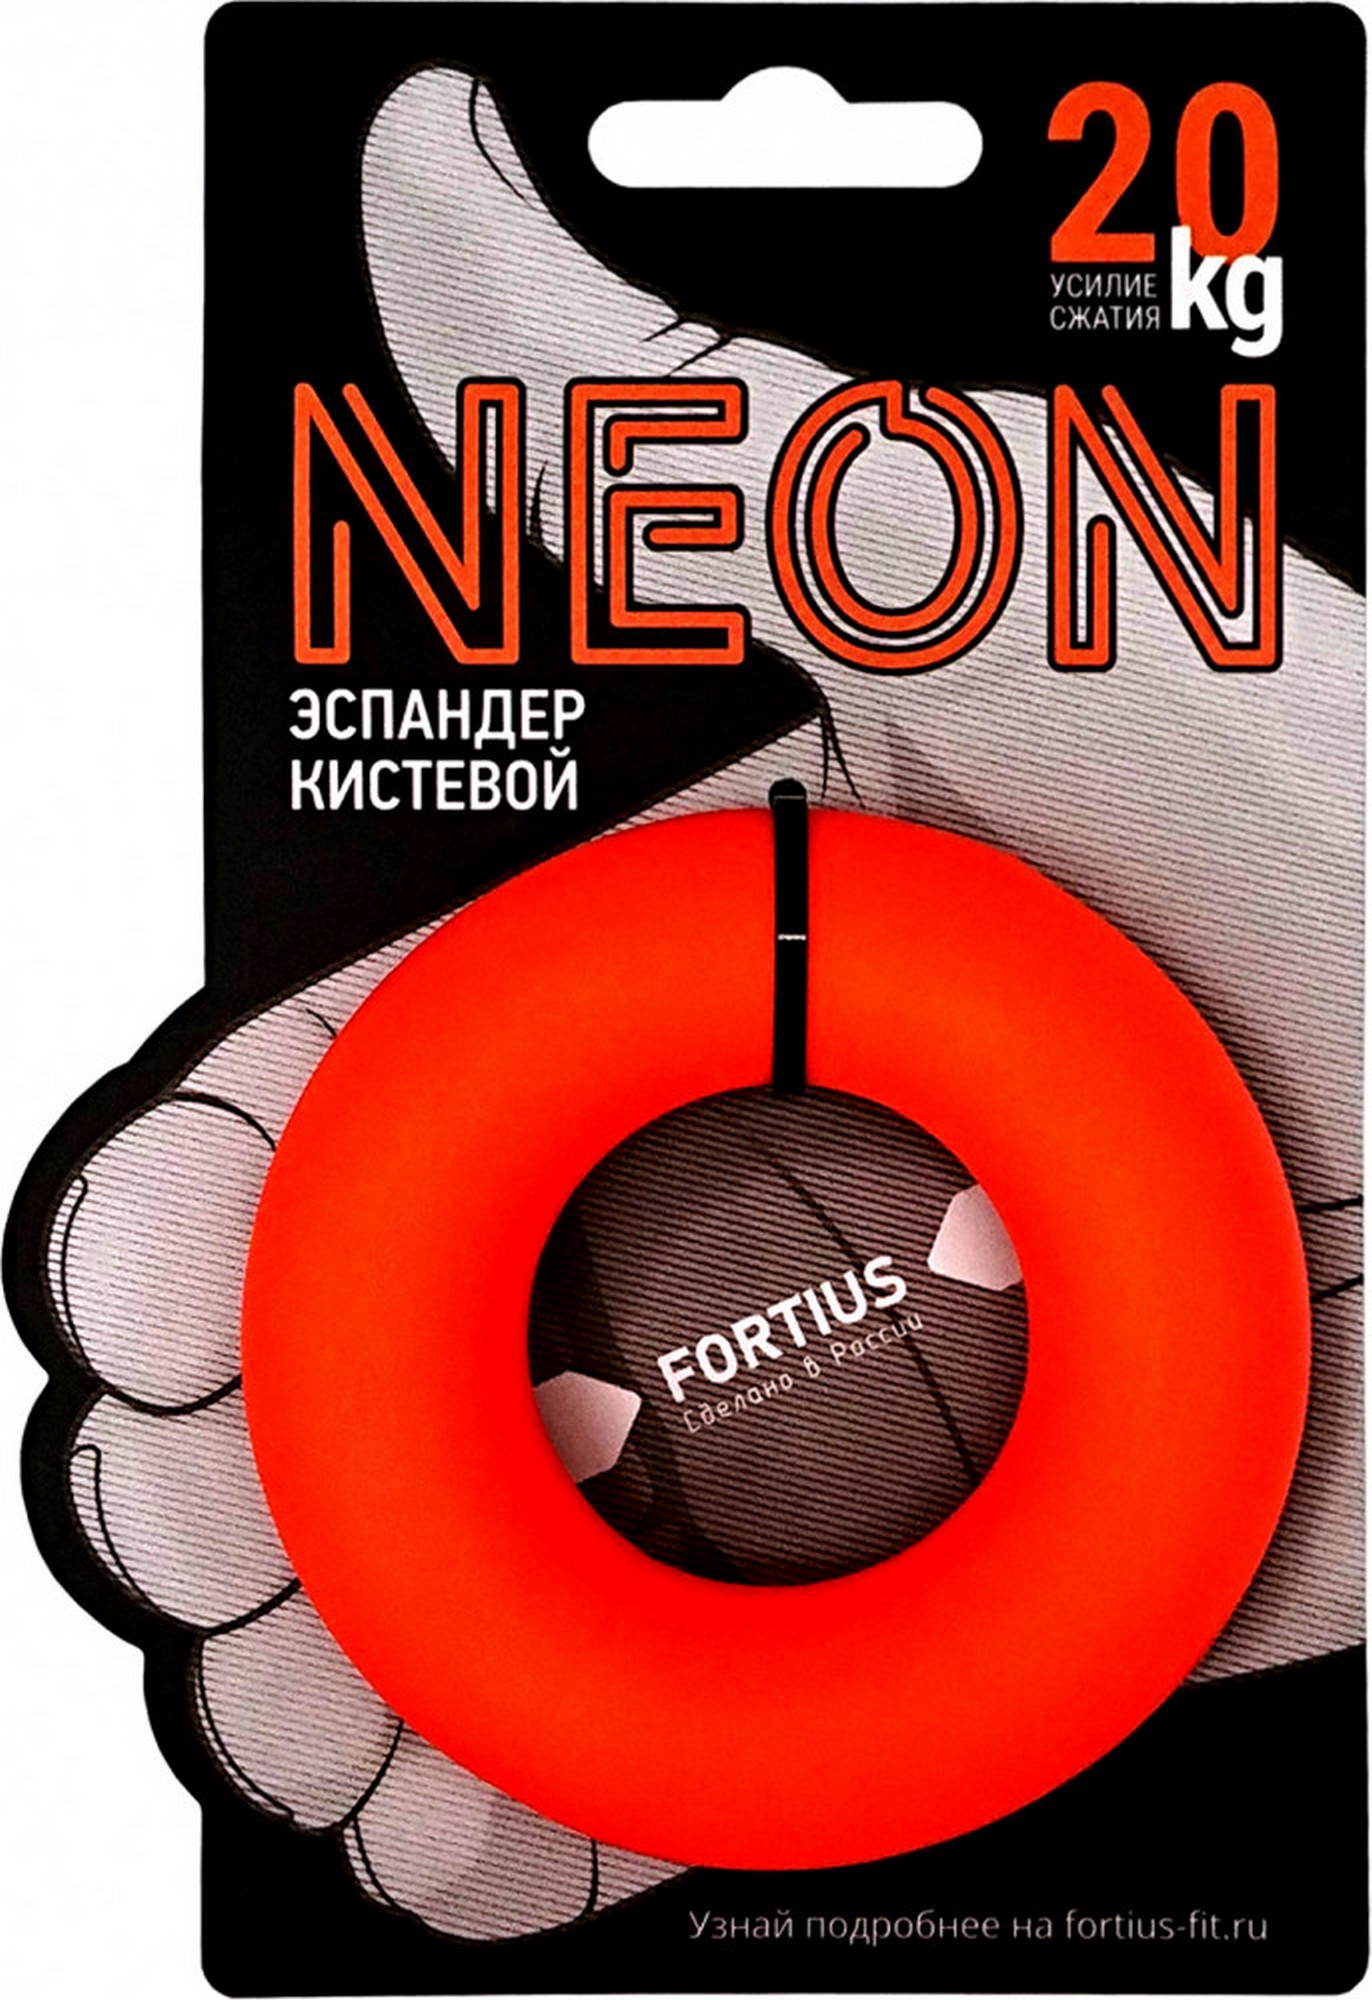 Эспандер кистевой Fortius Neon 20 кг H180701-20FO оранжевый 1372_2000